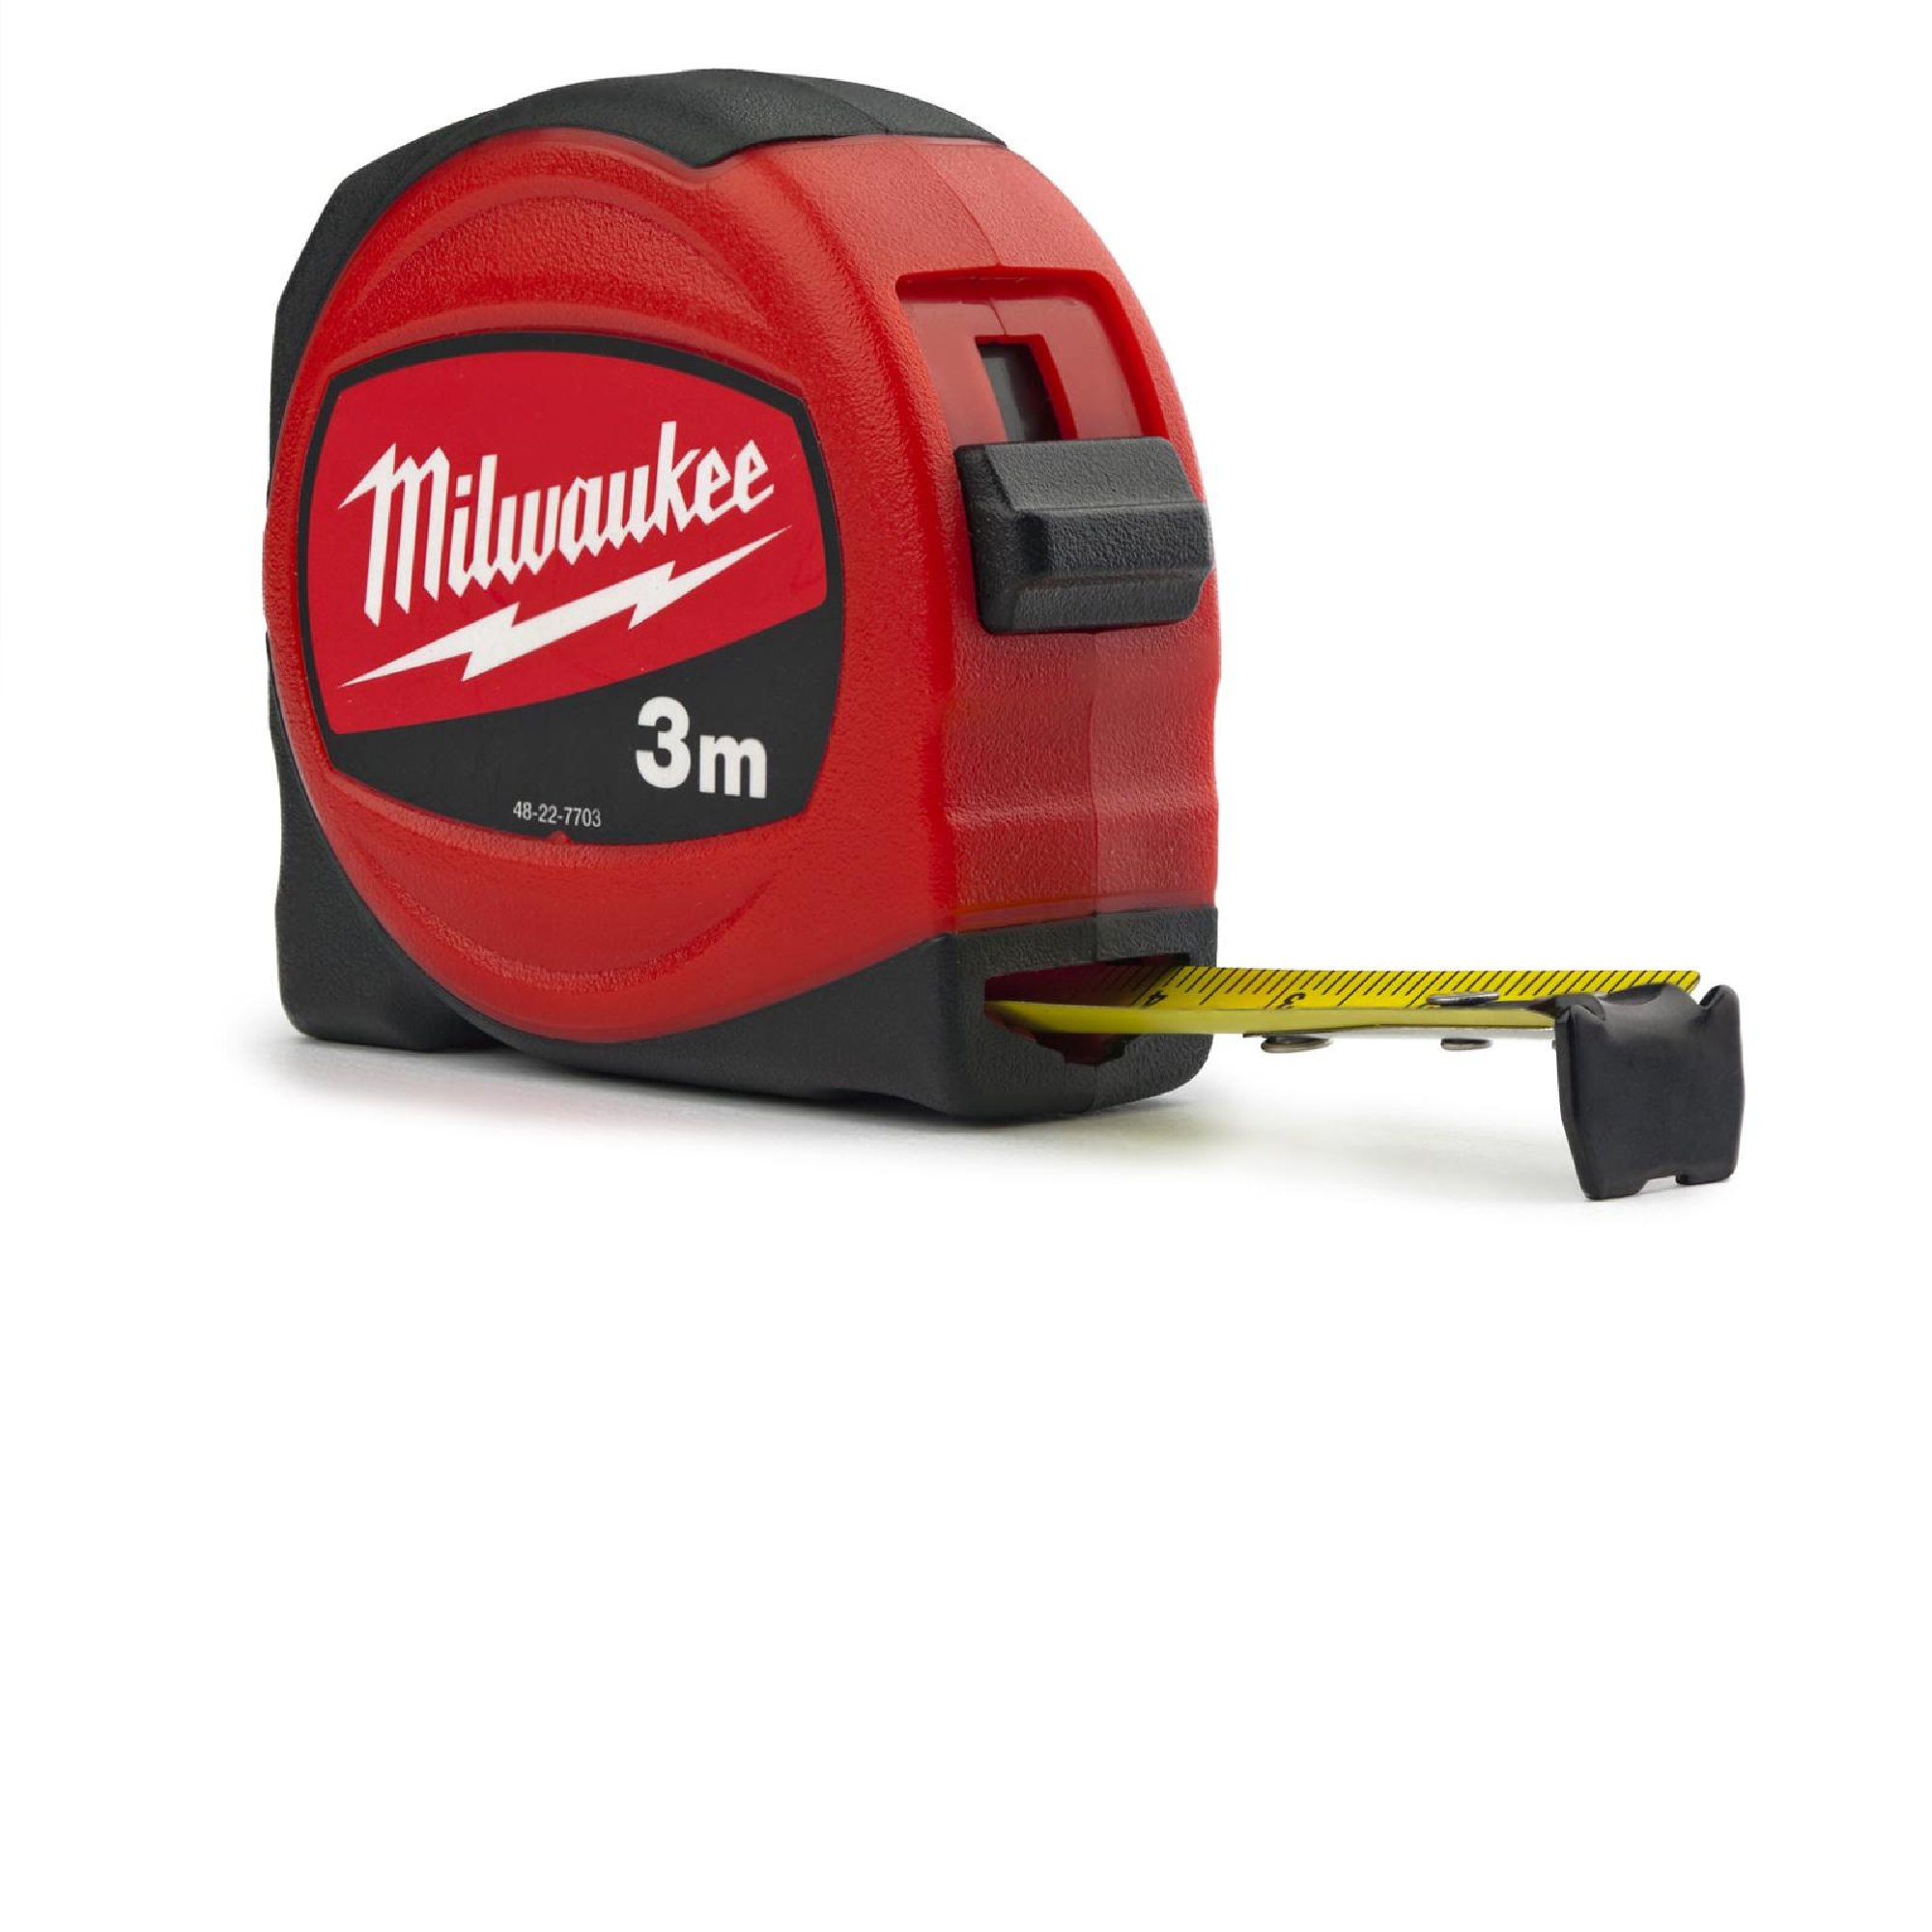 Flessometro Milwaukee Serie Slim